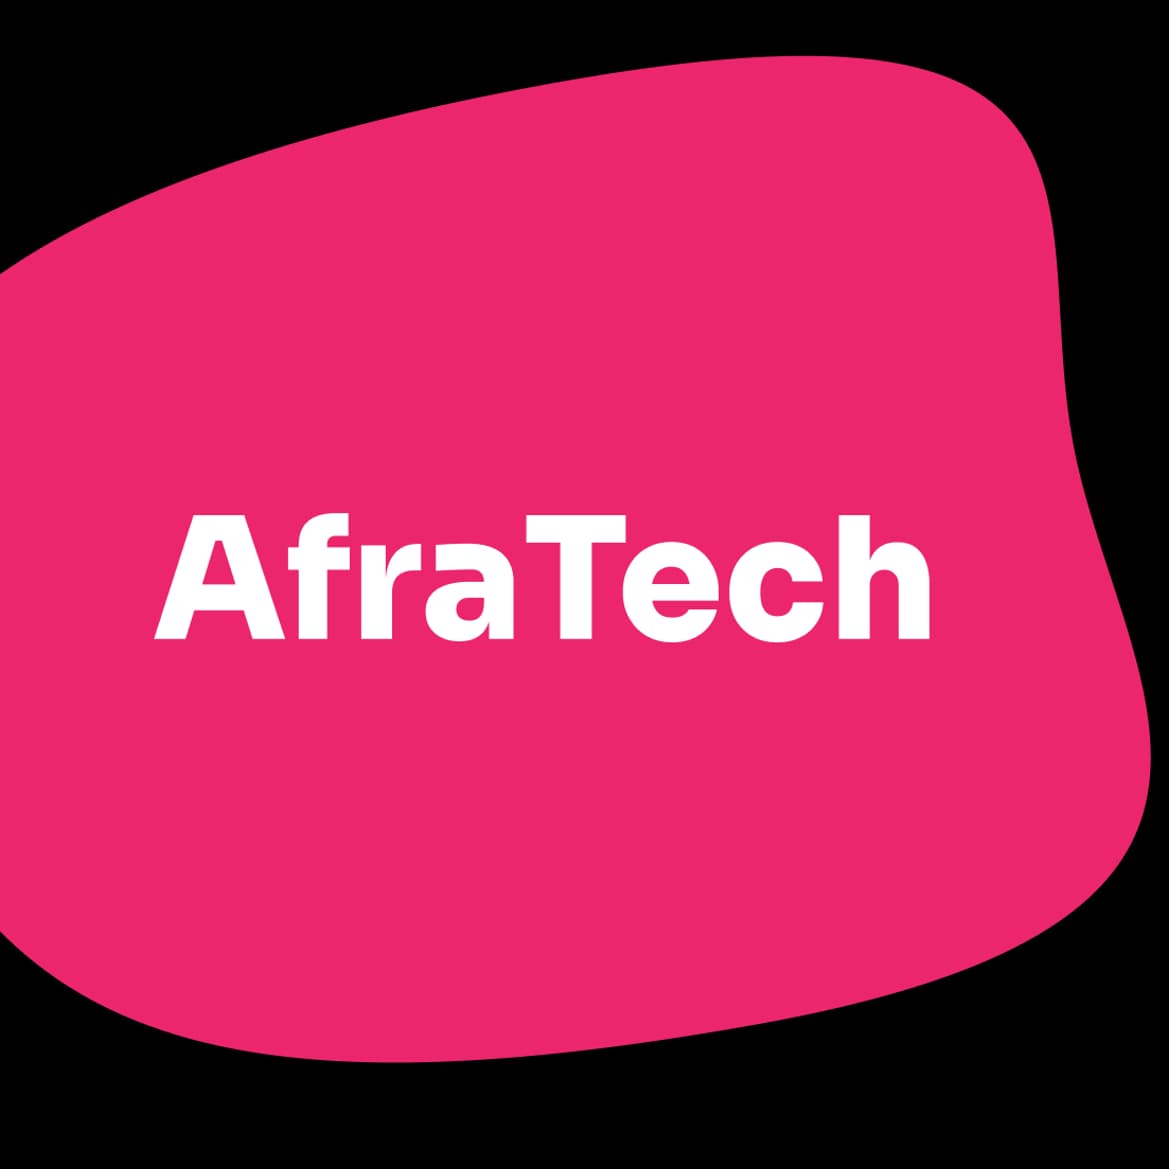 AfraTech's logo